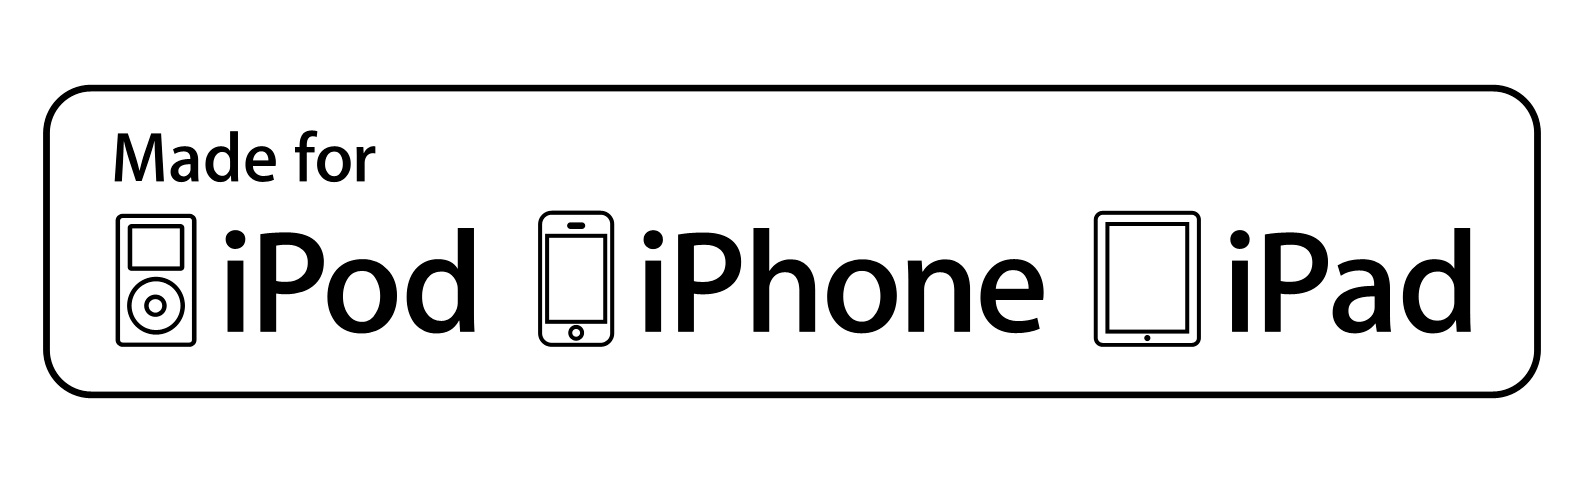 iPod Baby Logo photo - 1